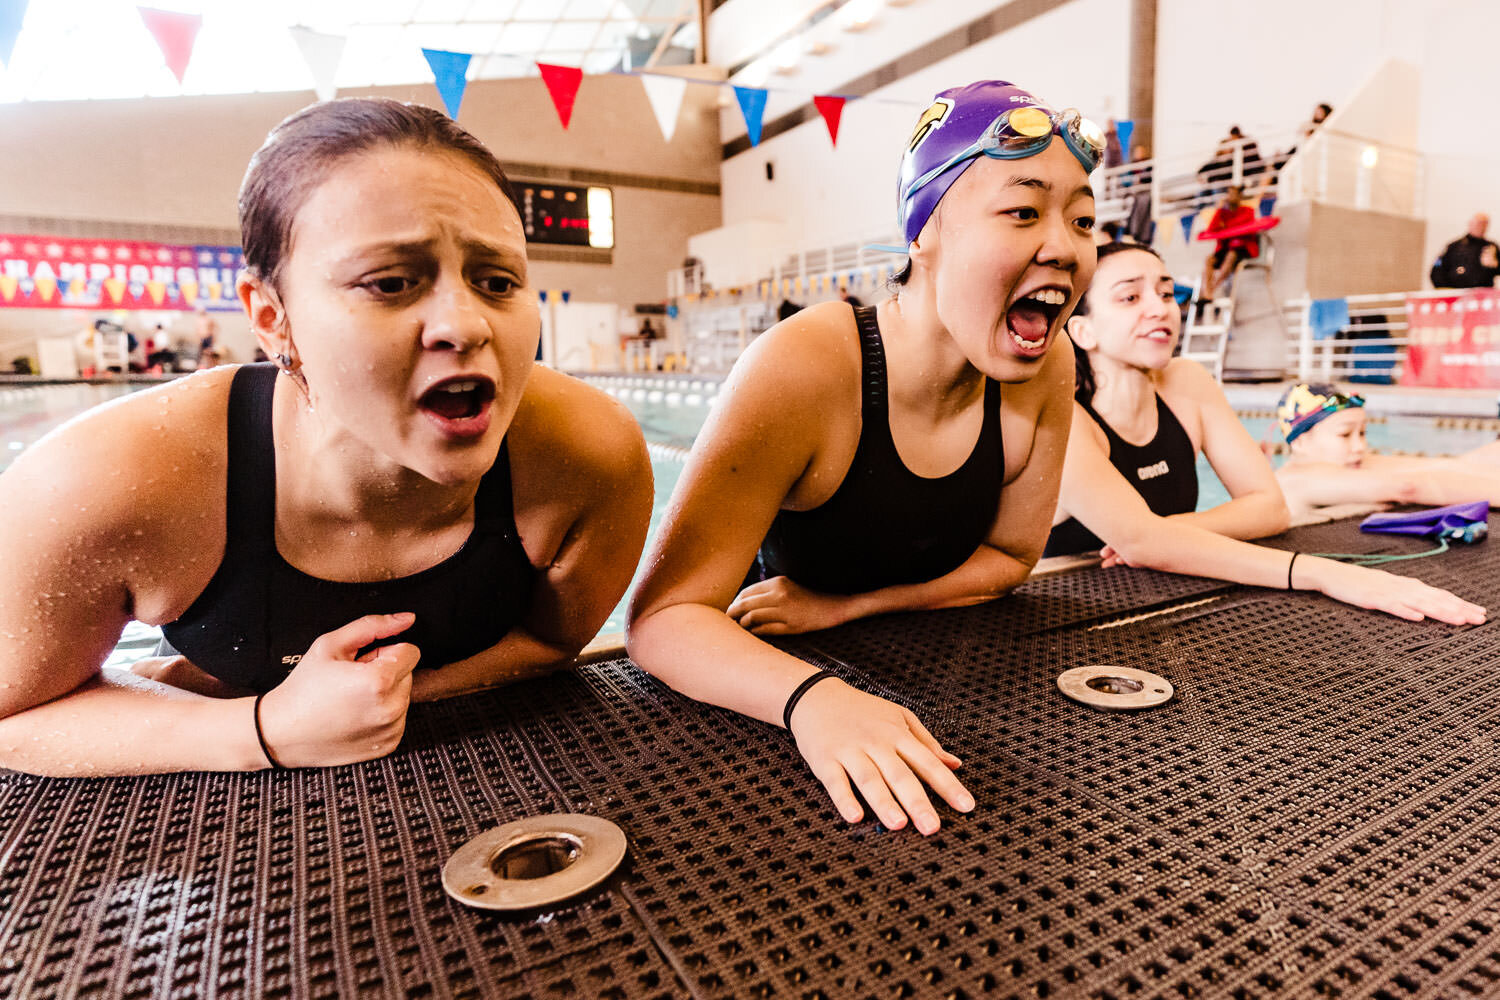 CUNY Athletics Swimming Championship 2020 at Lehman College